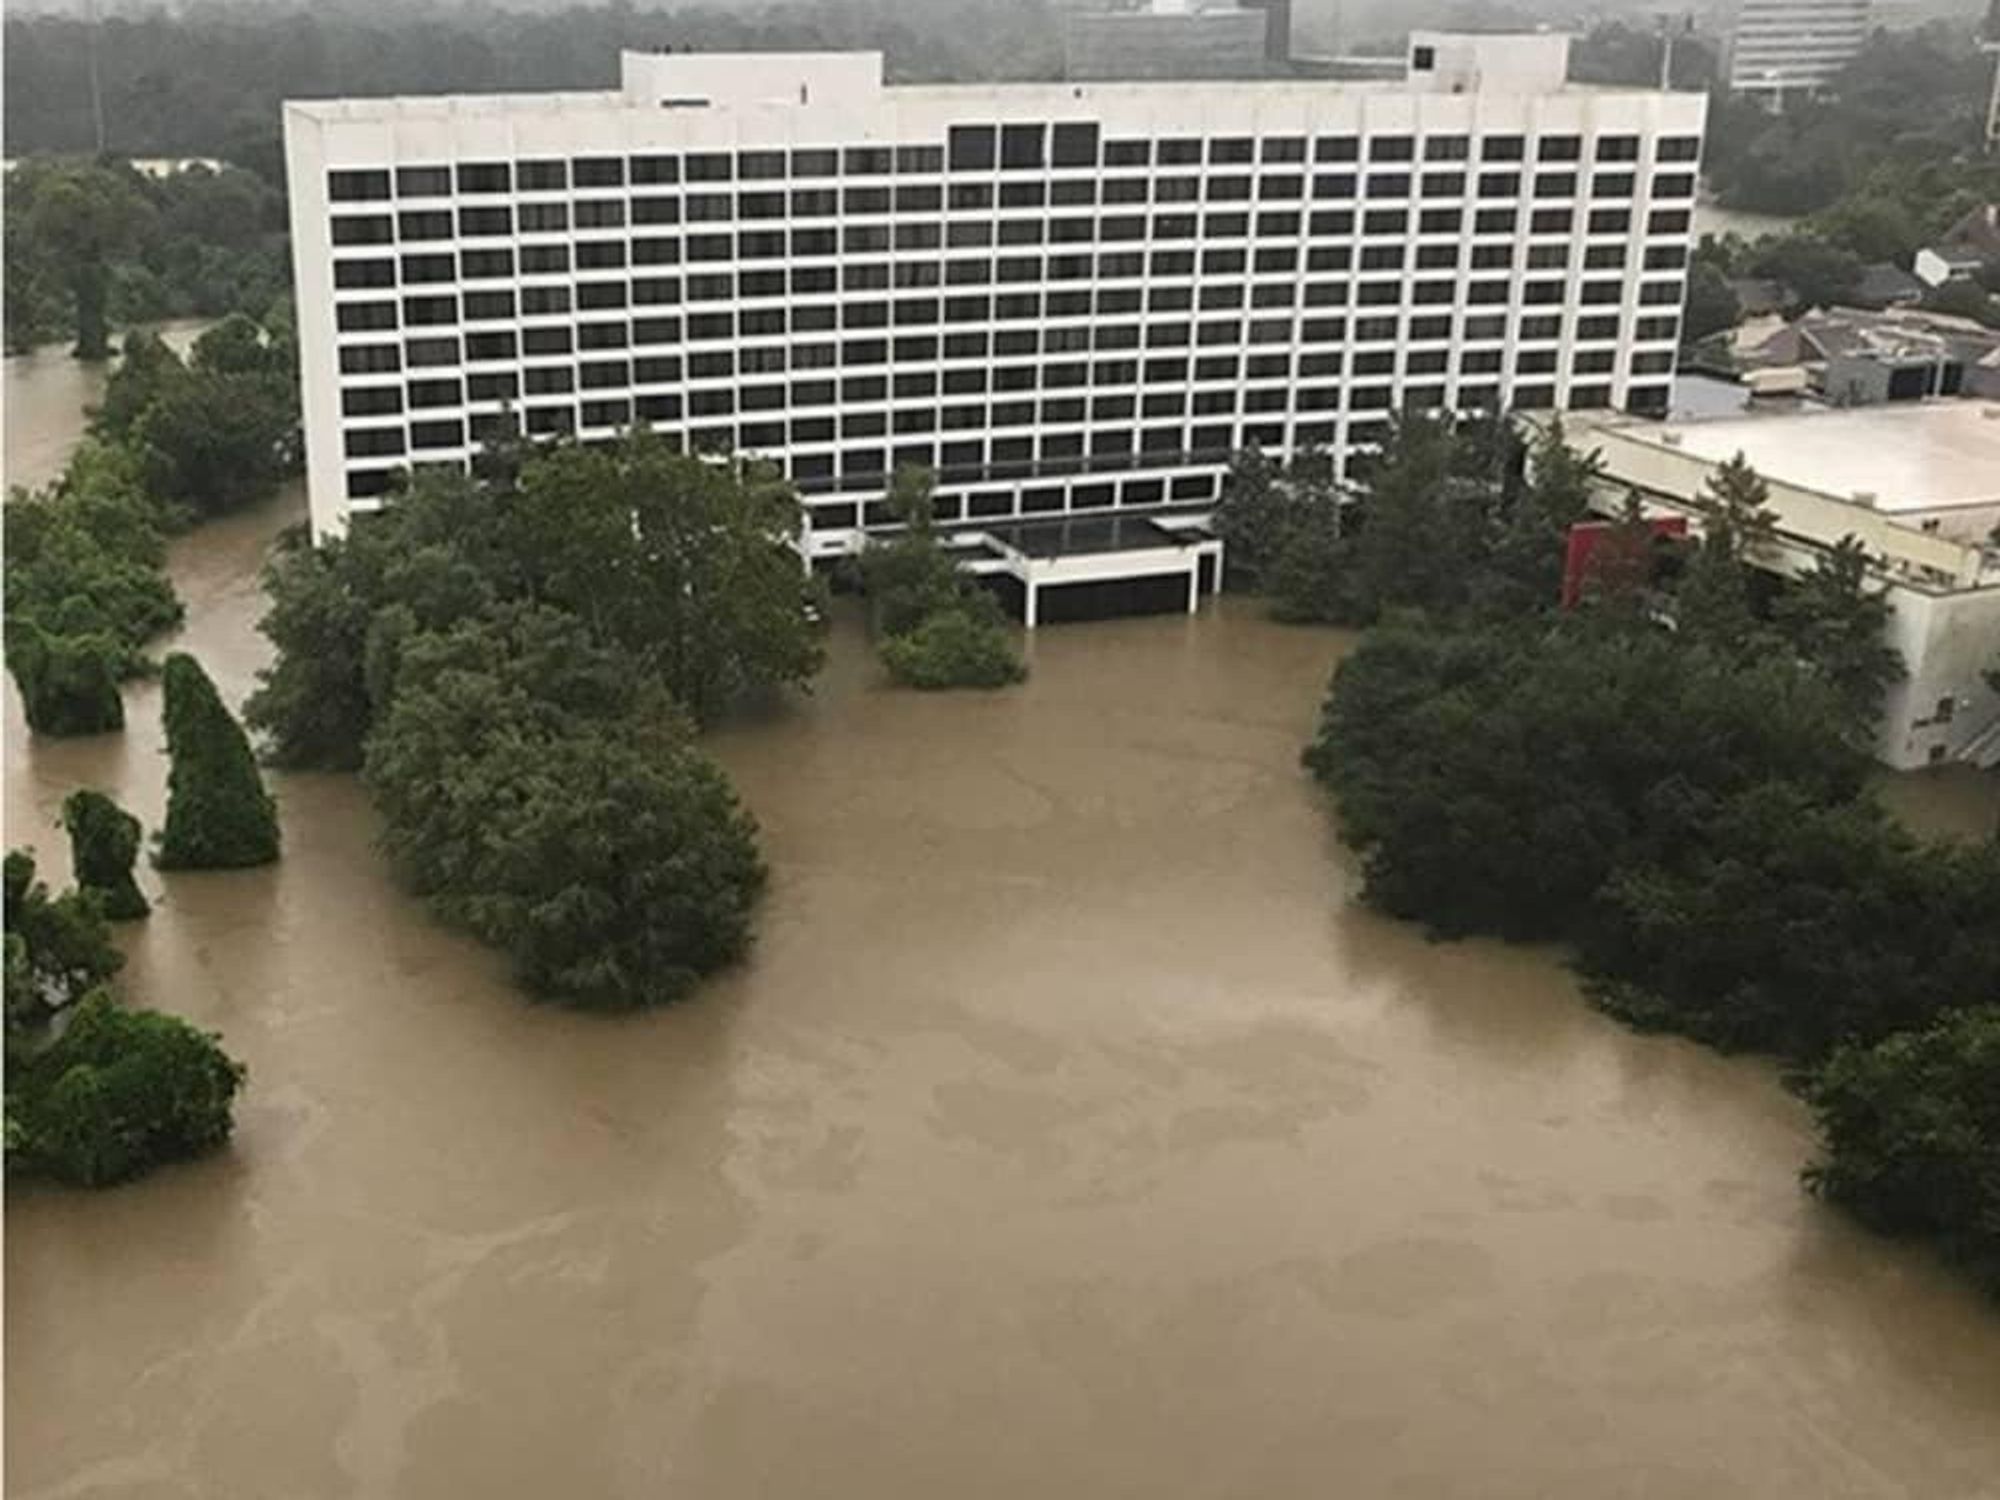 flooding at Houston Omni hotel from Hurricane Harvey